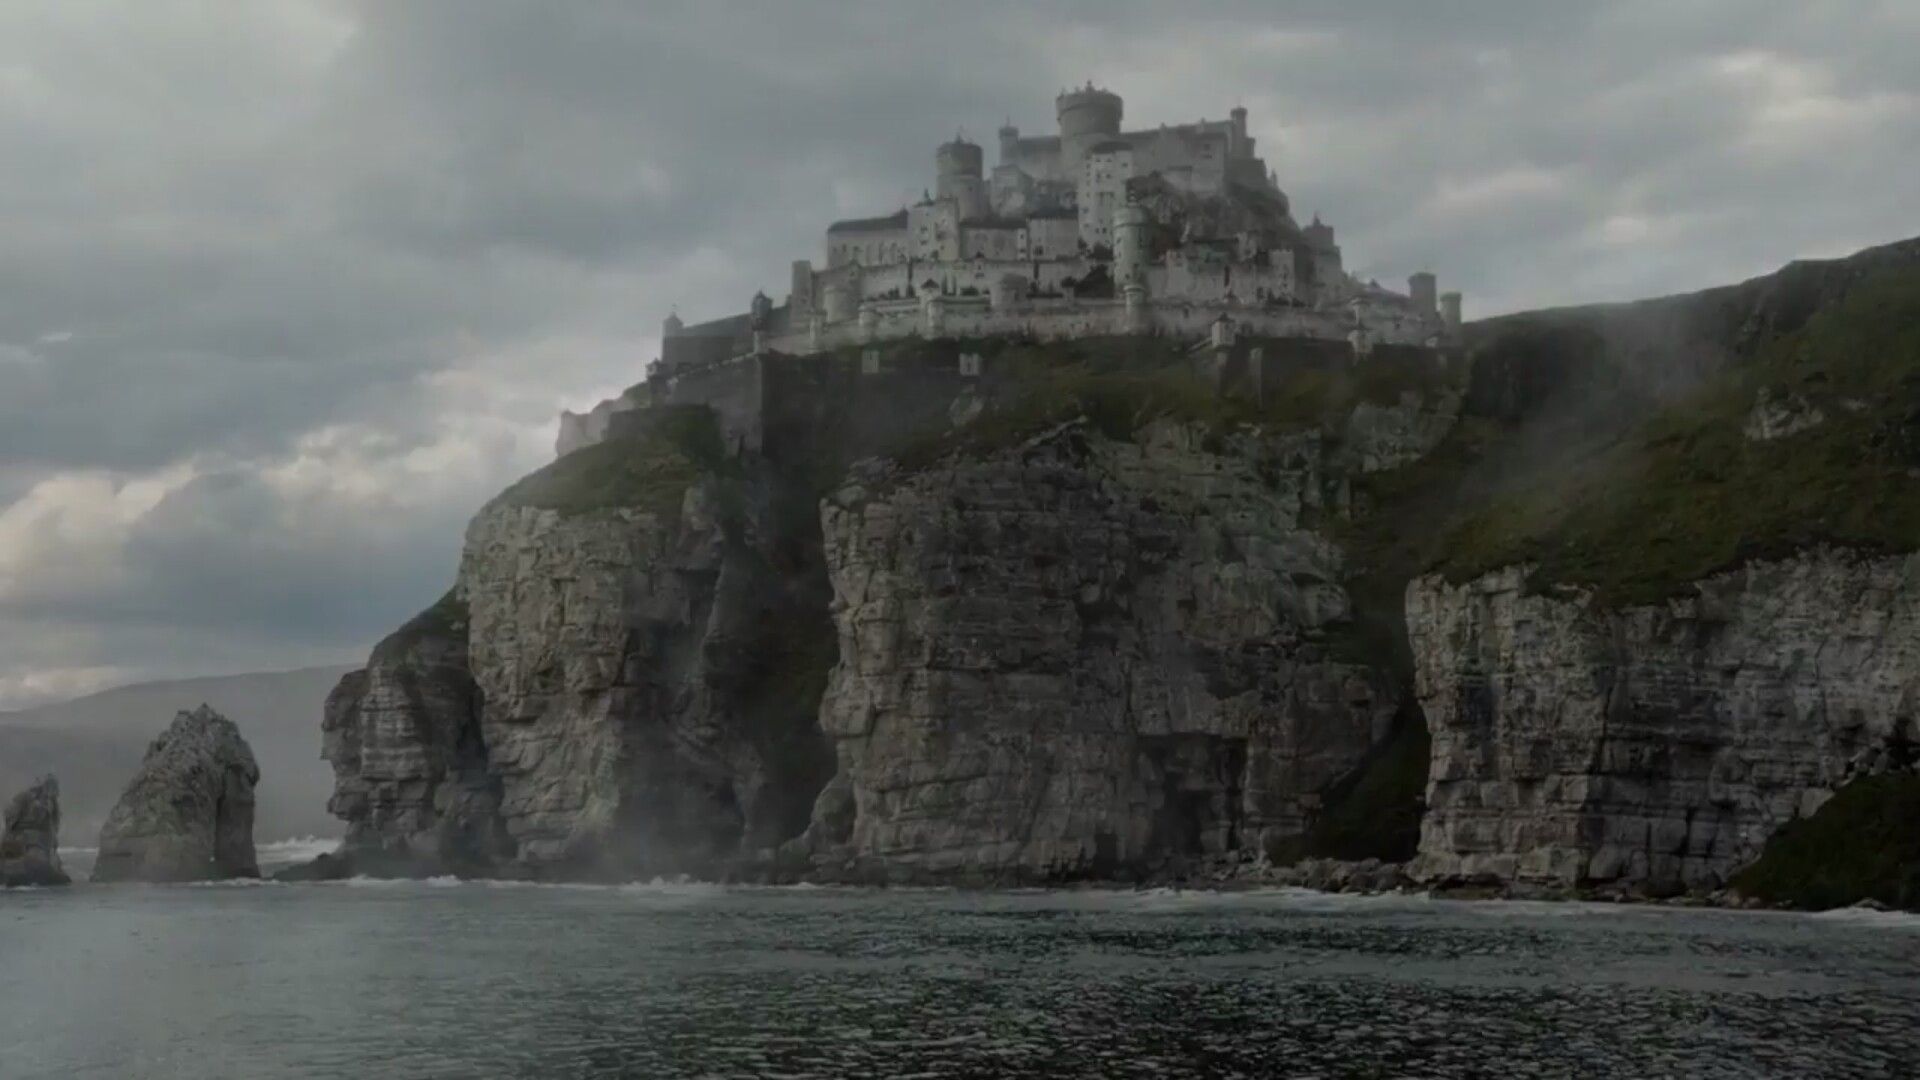 Game of Thrones landscape castle